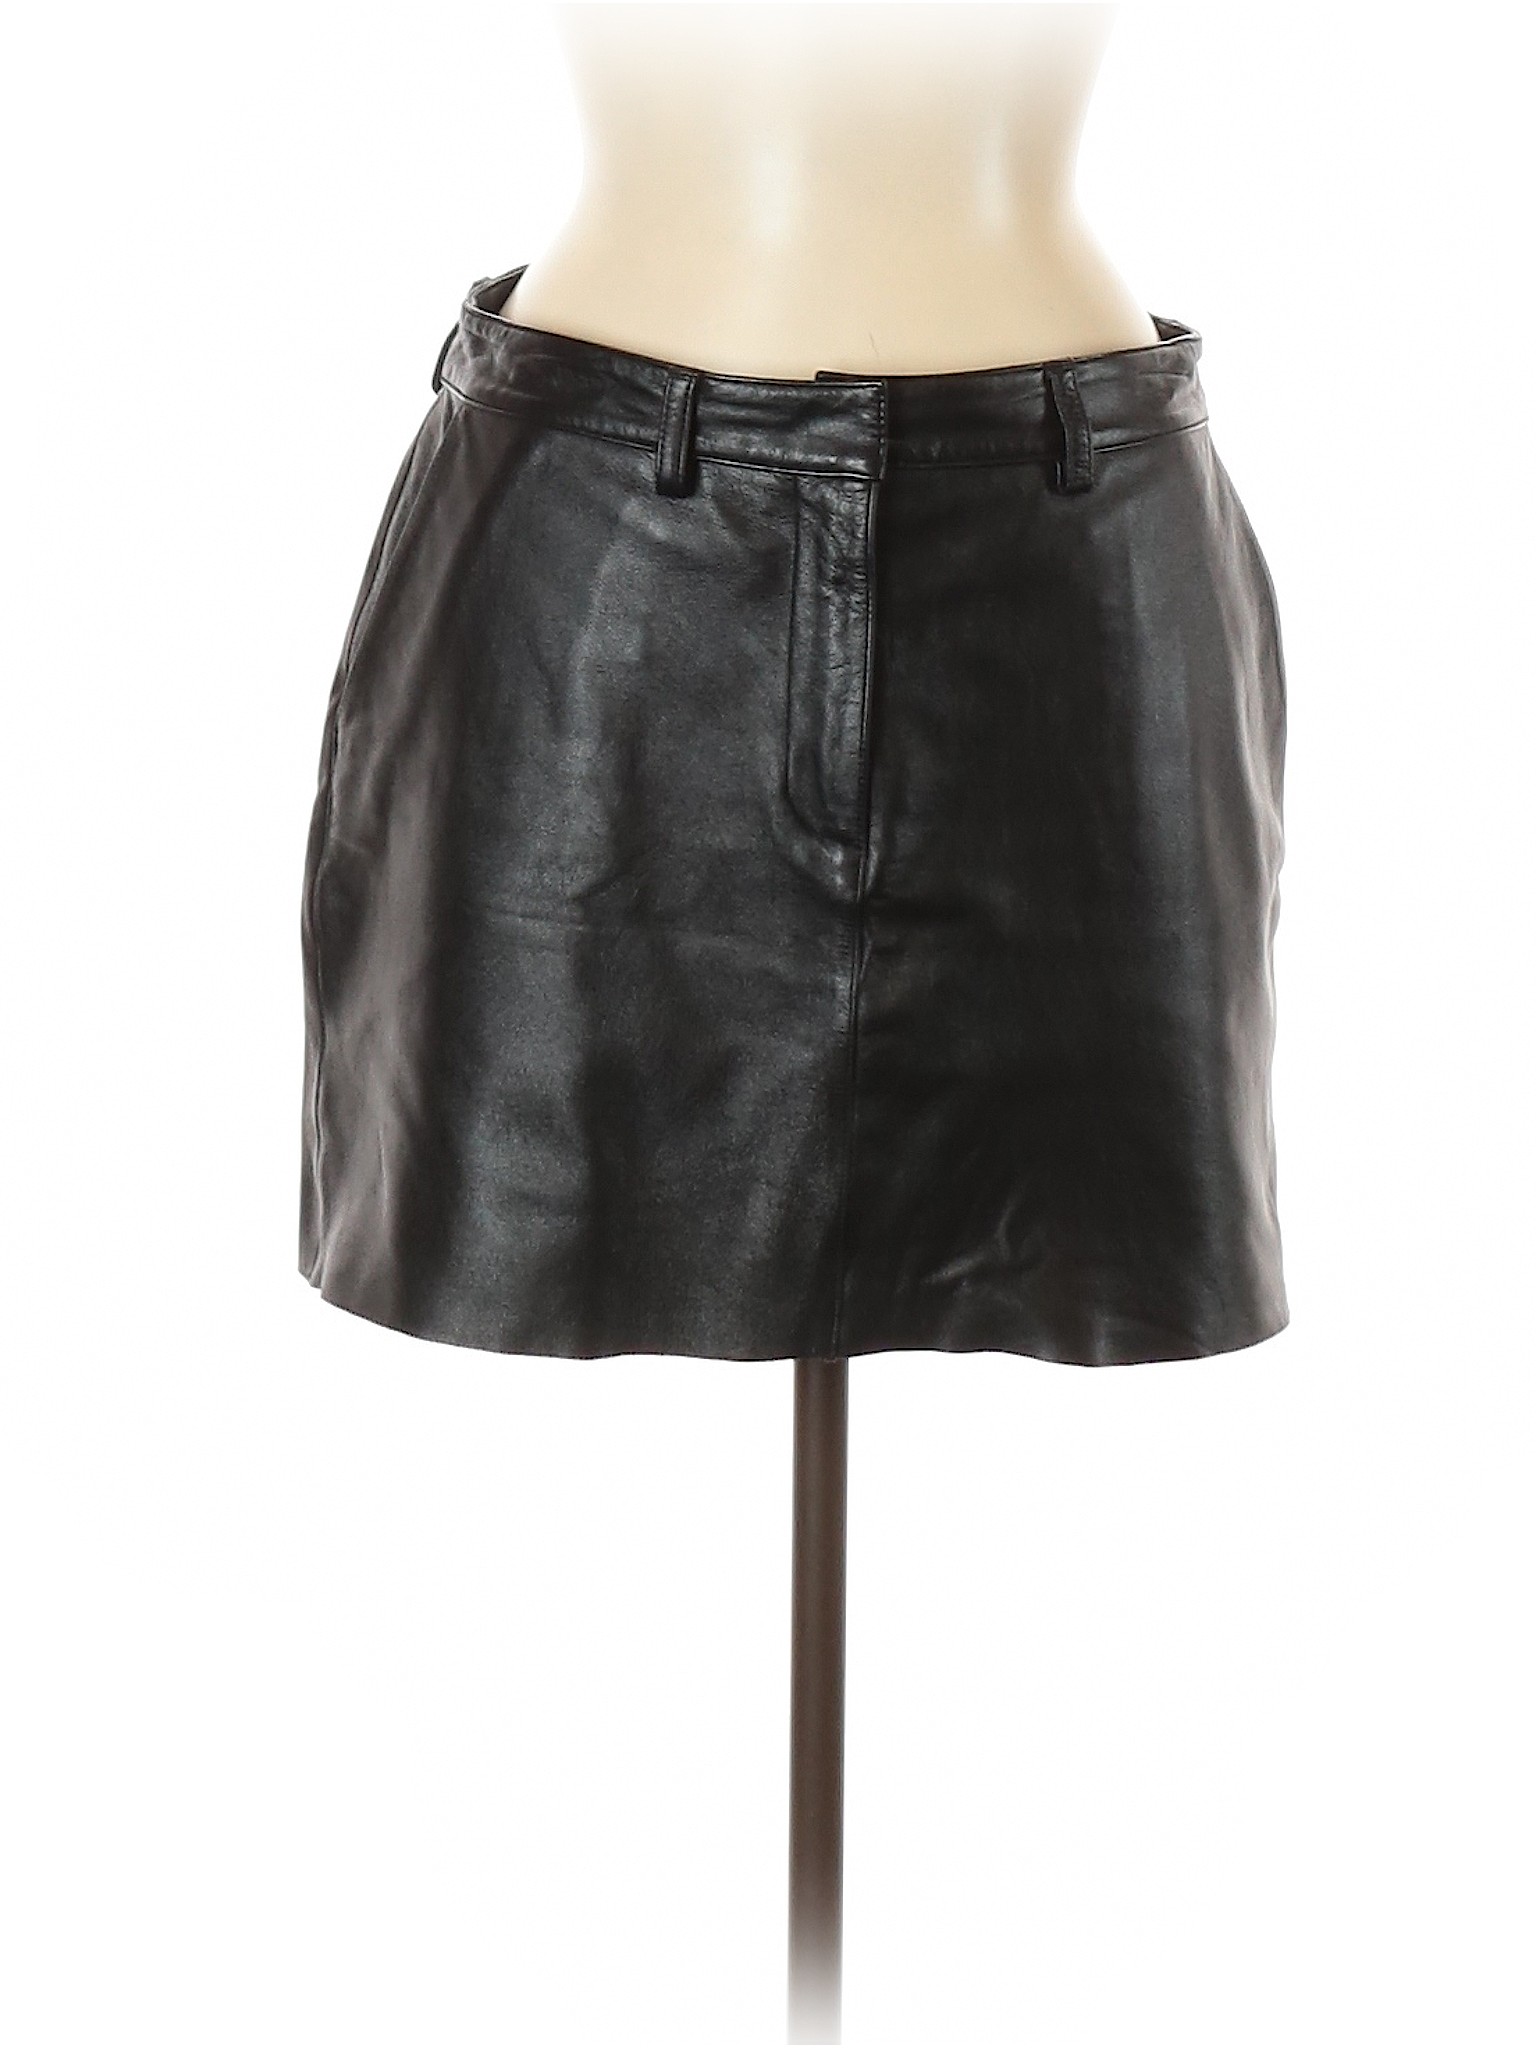 Wilsons Leather Maxima Women Black Leather Skirt 10 | eBay